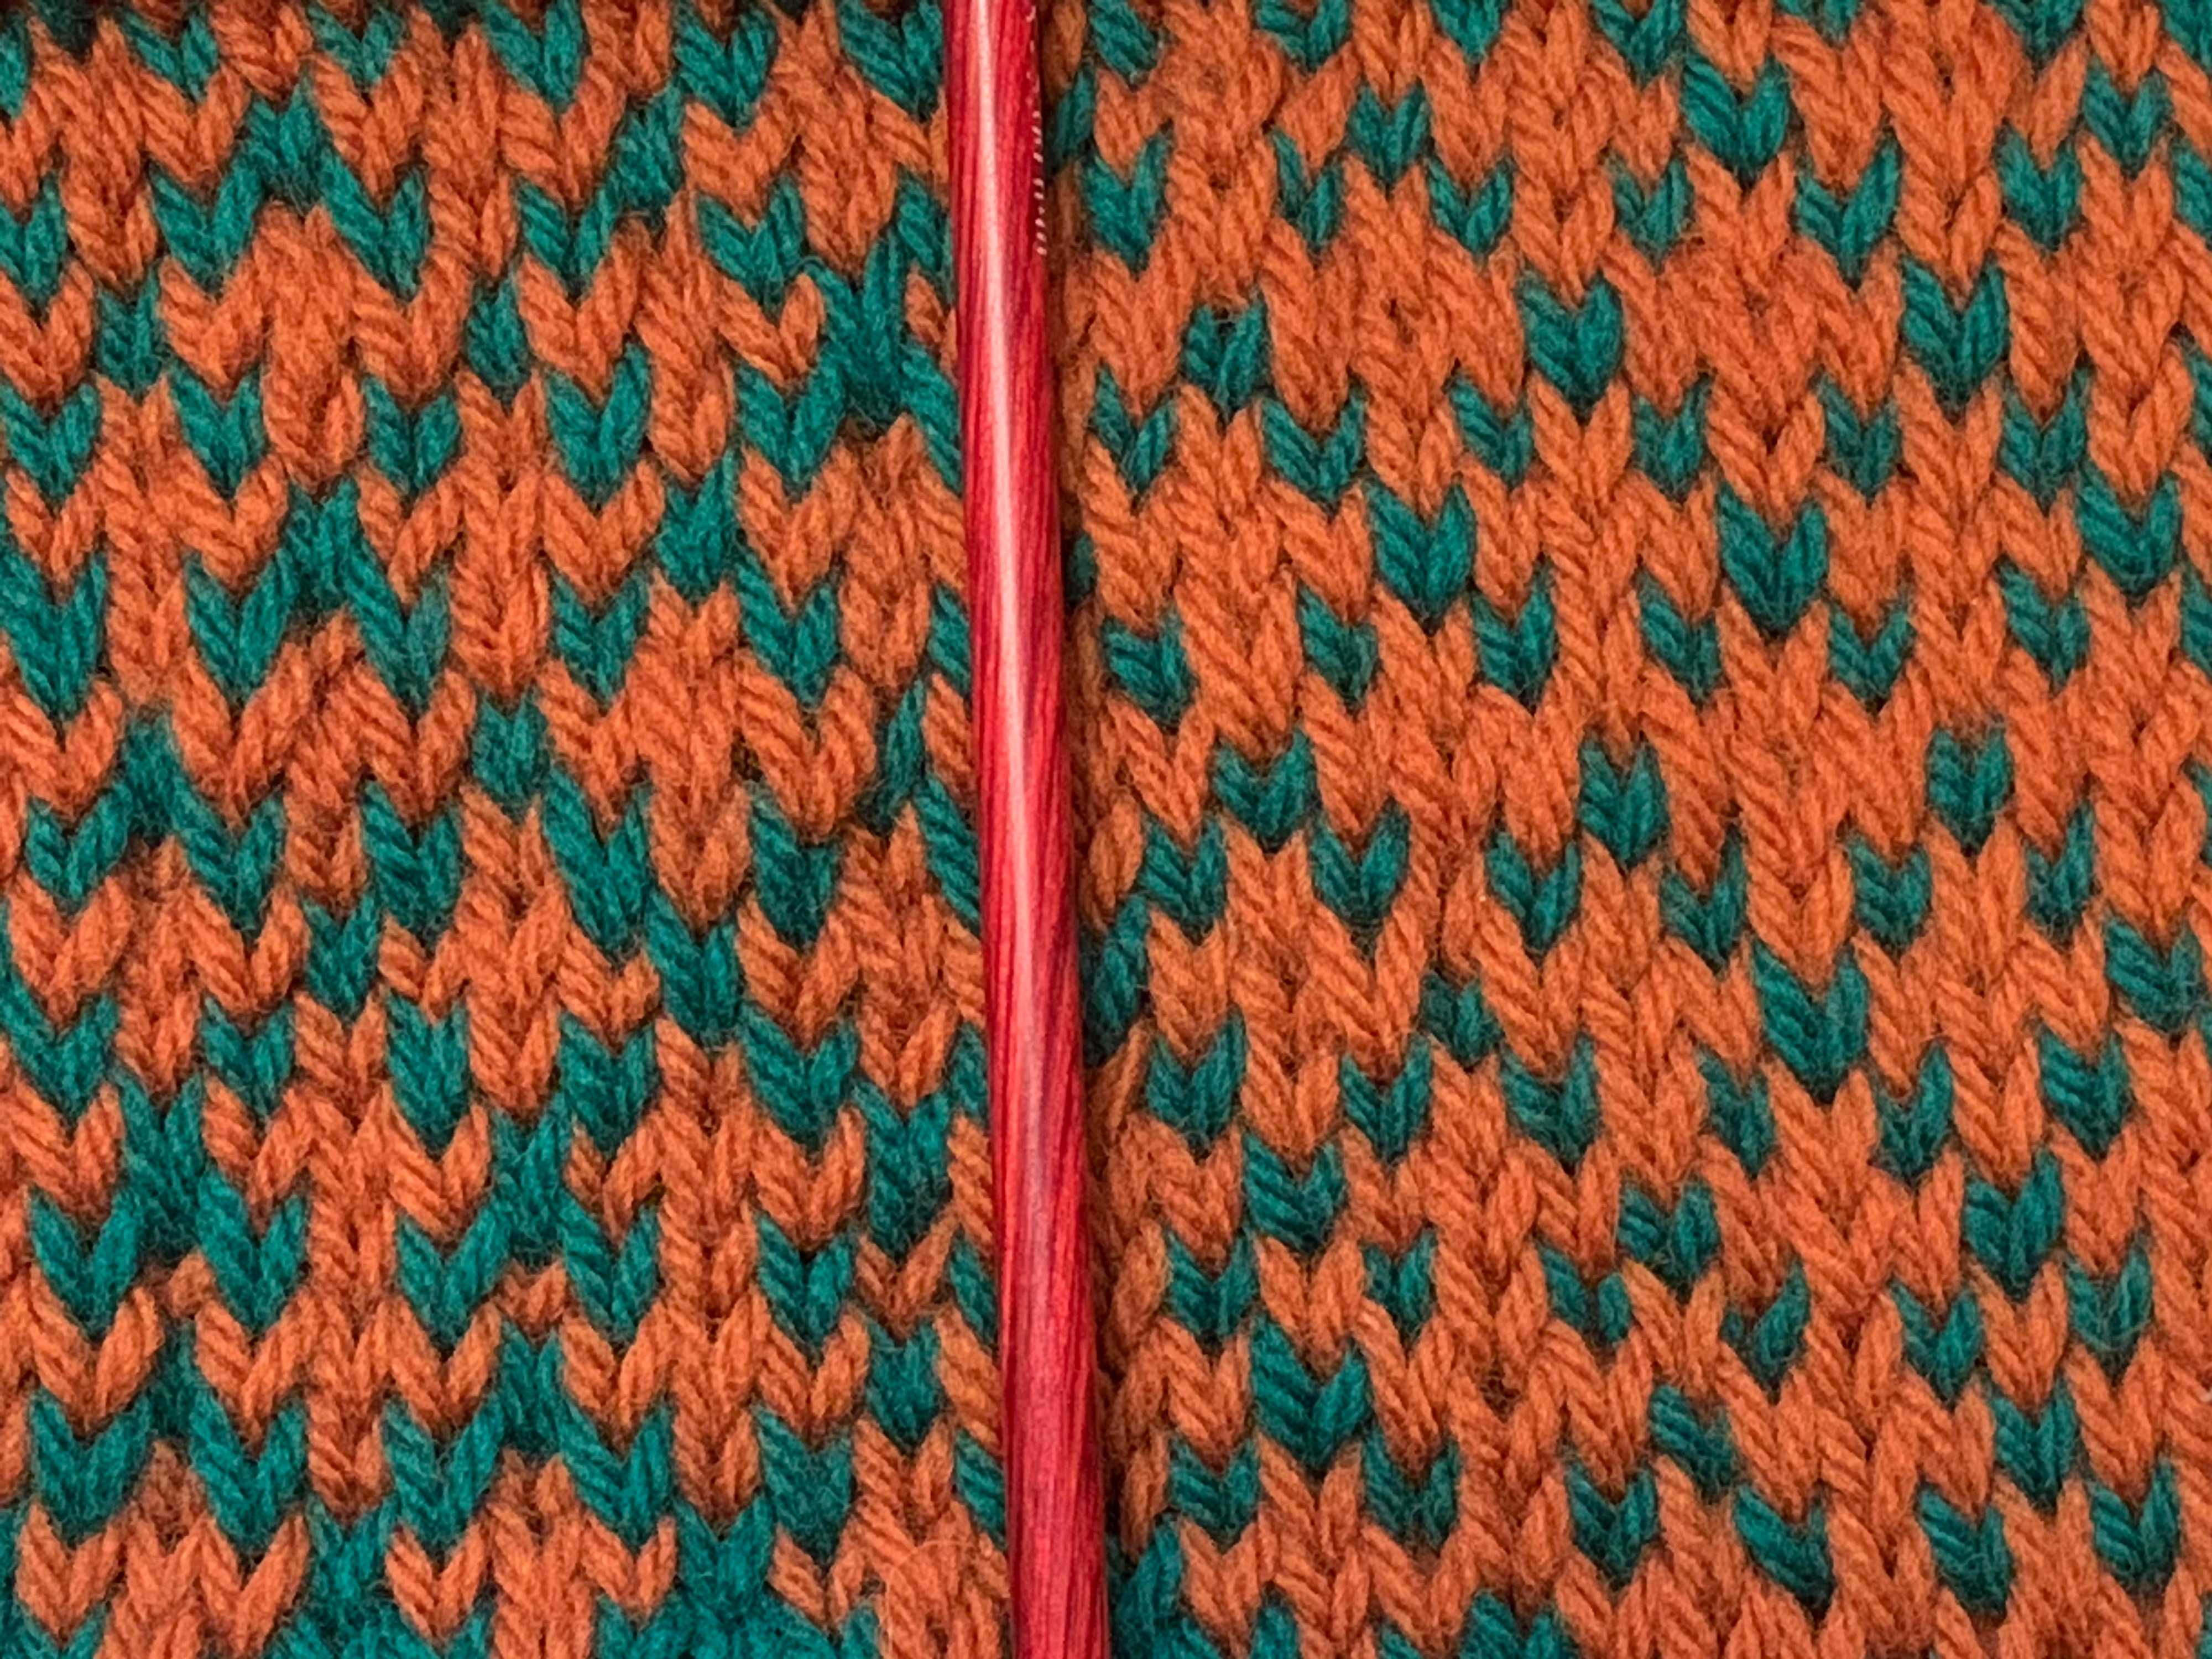 An example of yarn dominance